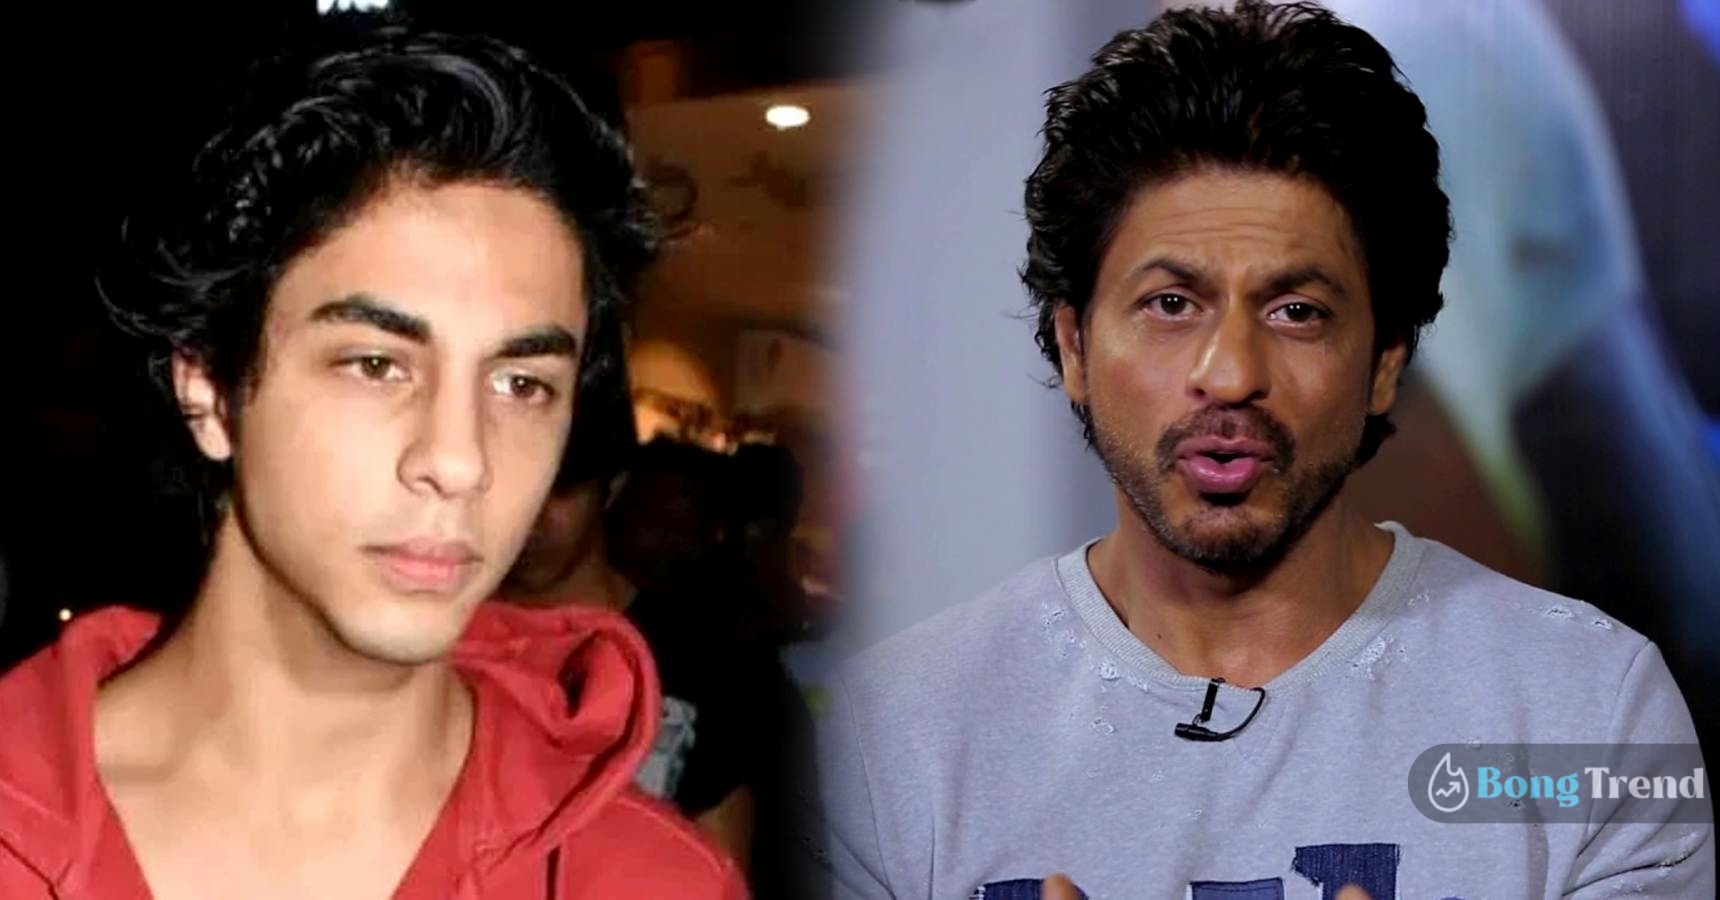 SRK Fans support Aryan Khan on social media